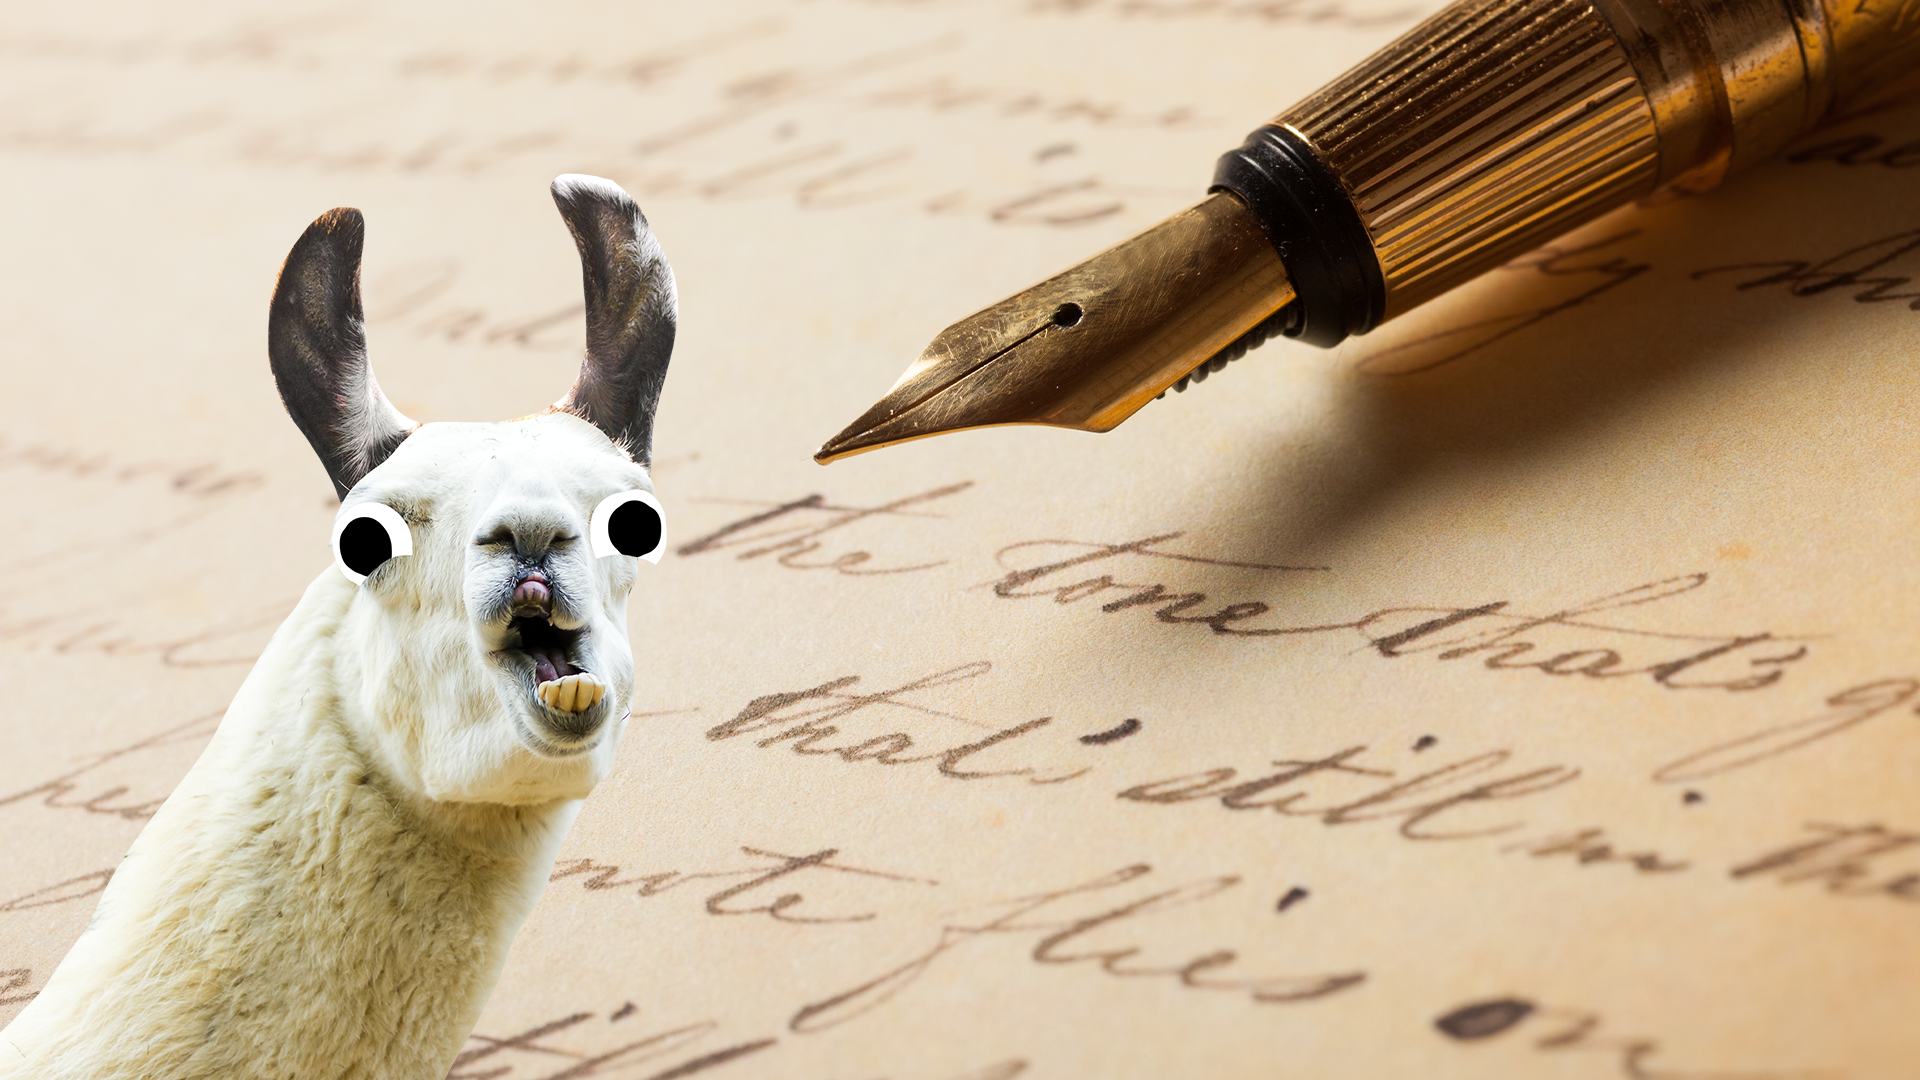 Pen, paper and derpy llama 